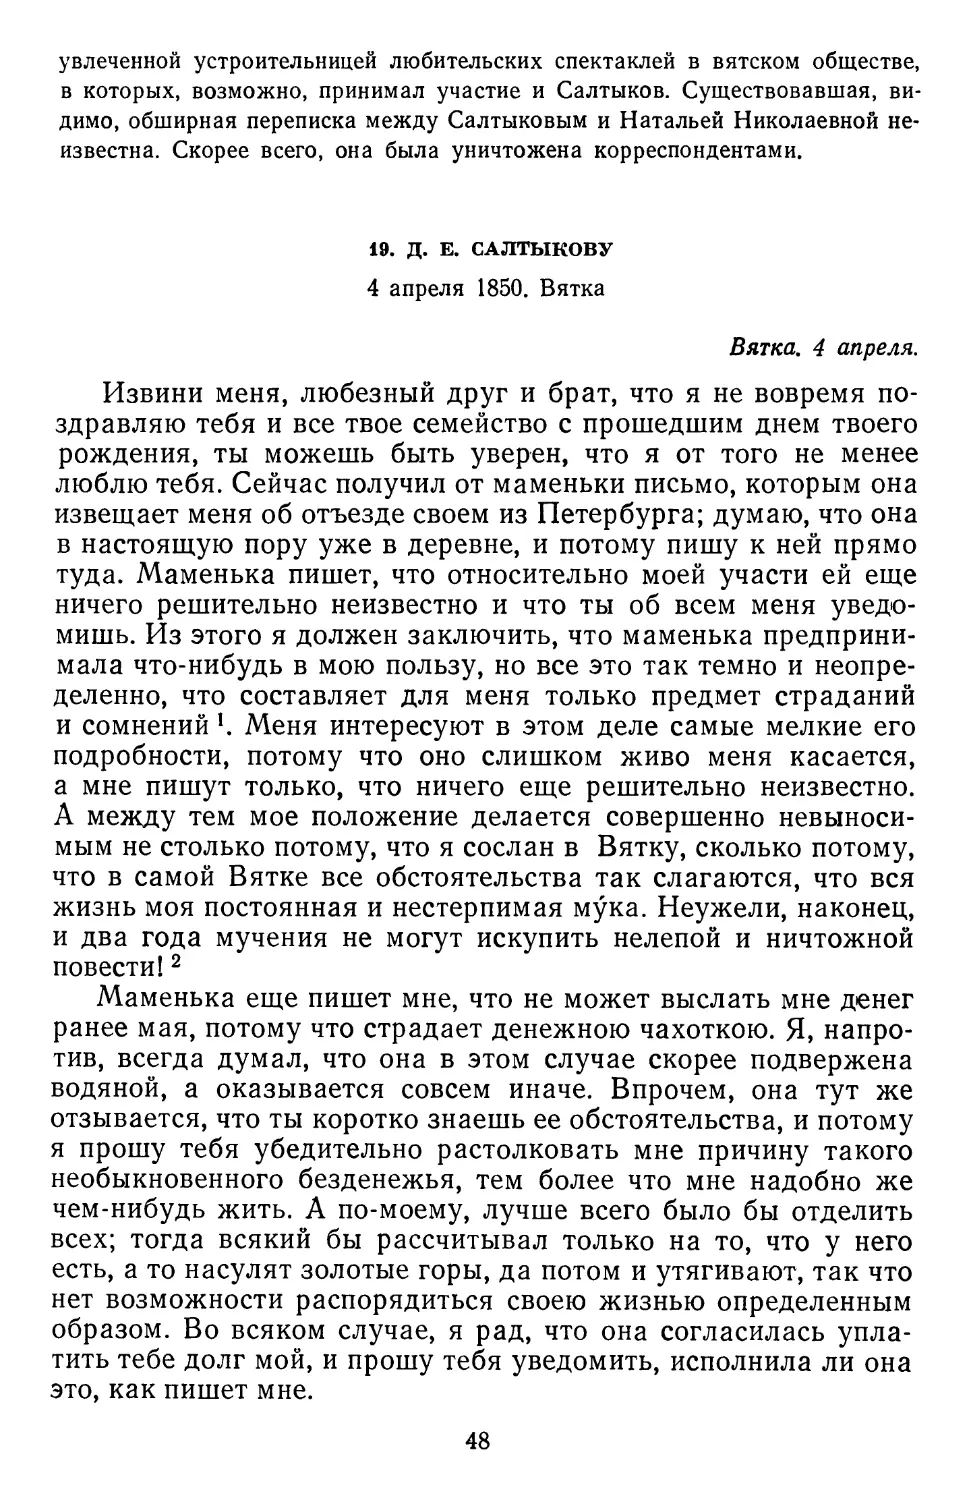 19.Д. Е. Салтыкову. 4 апреля 1850. Вятка